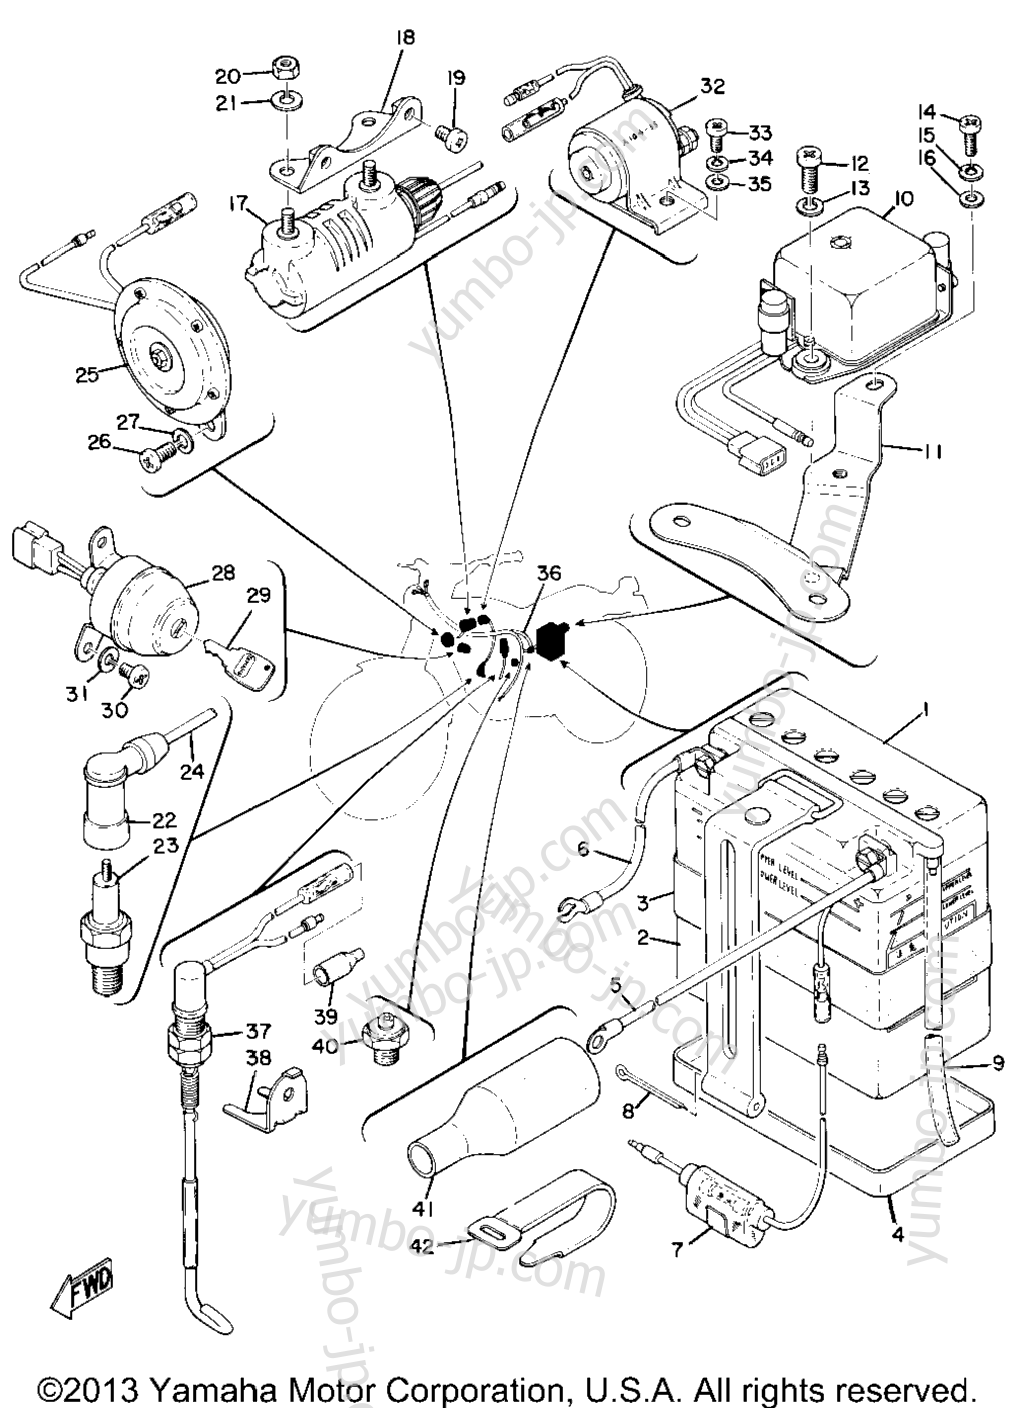 Electrical (At1-B) for motorcycles YAMAHA CT1B 1970 year